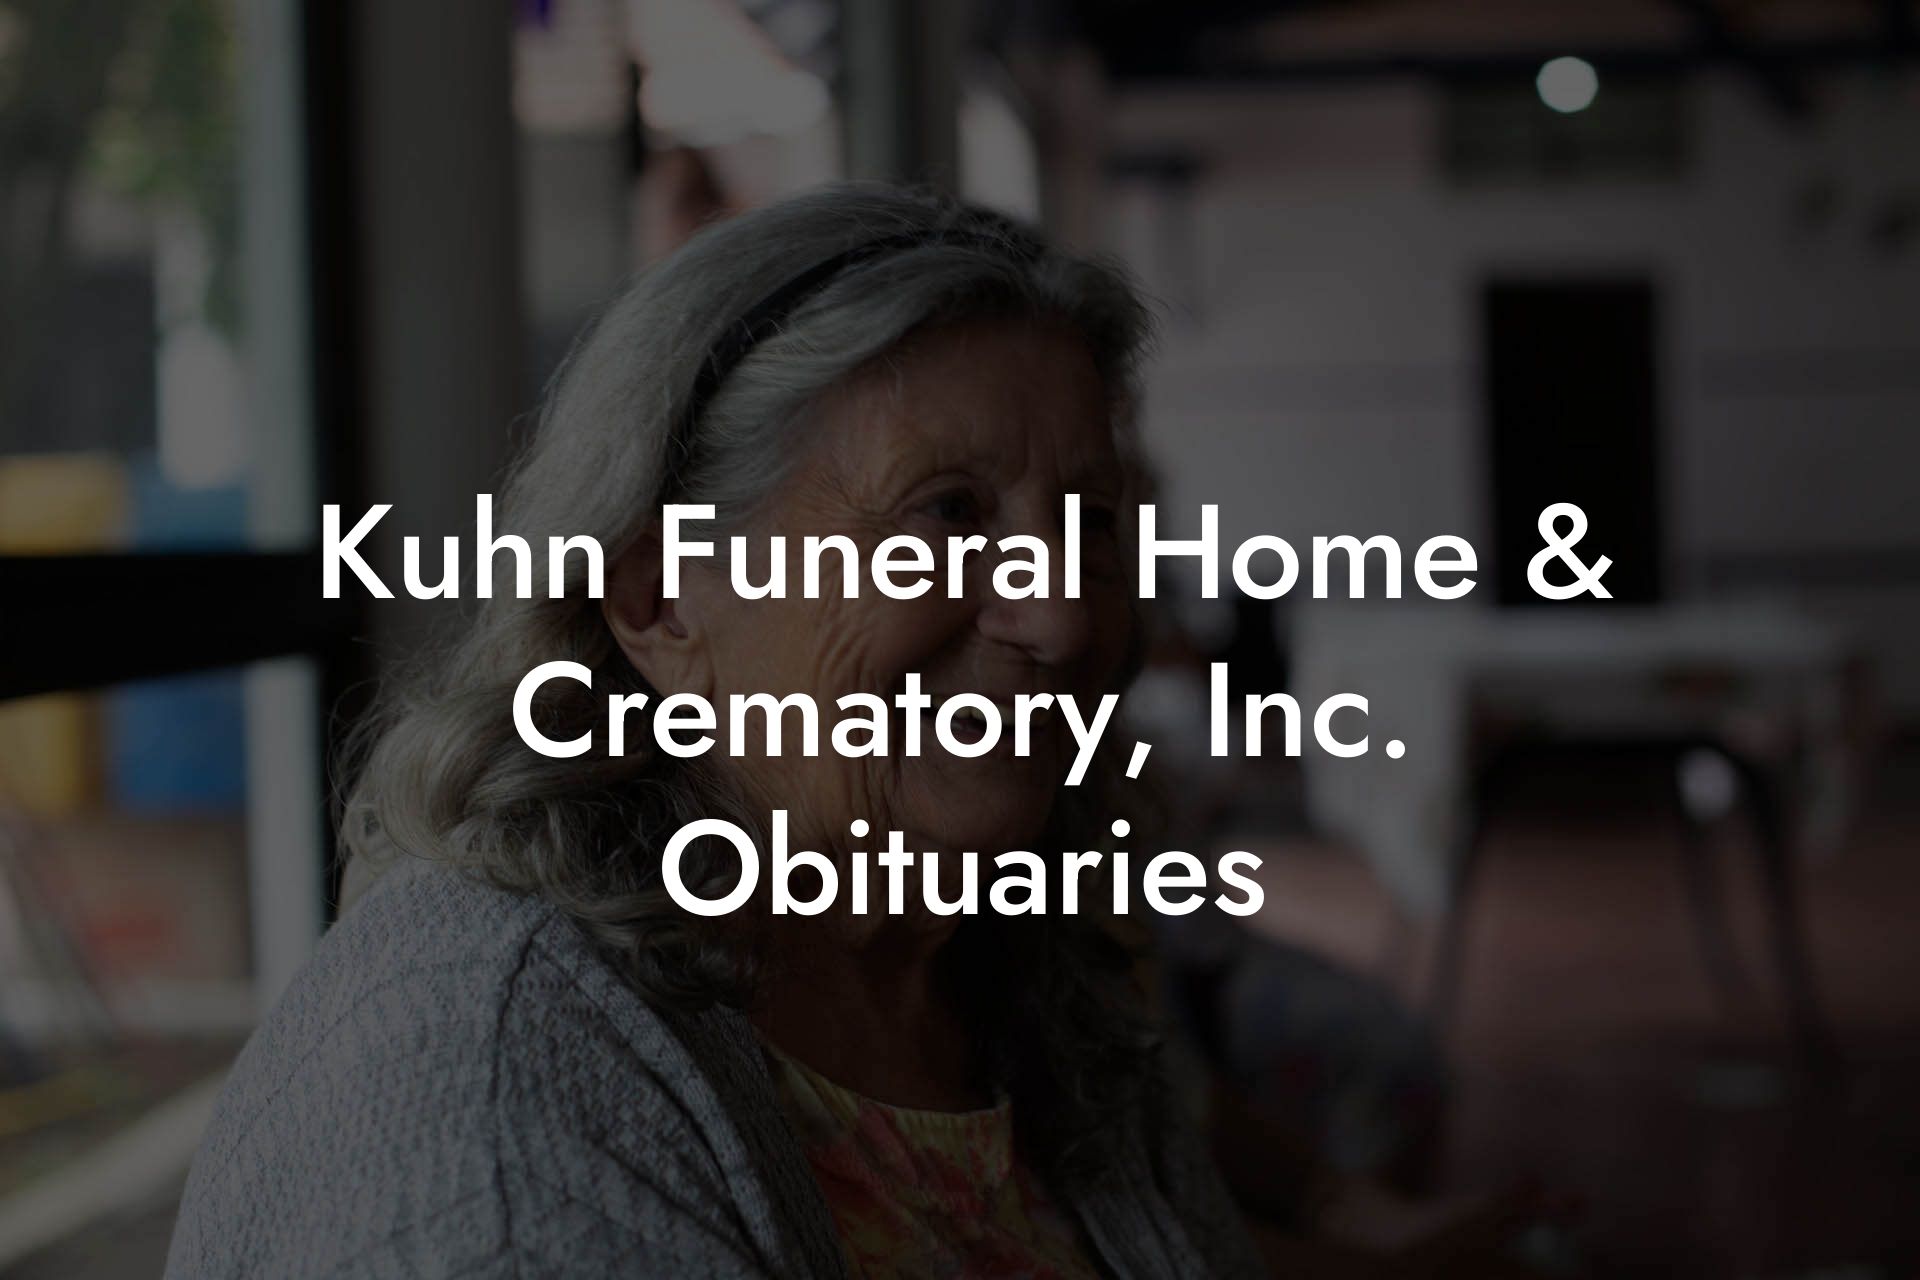 Kuhn Funeral Home & Crematory, Inc. Obituaries